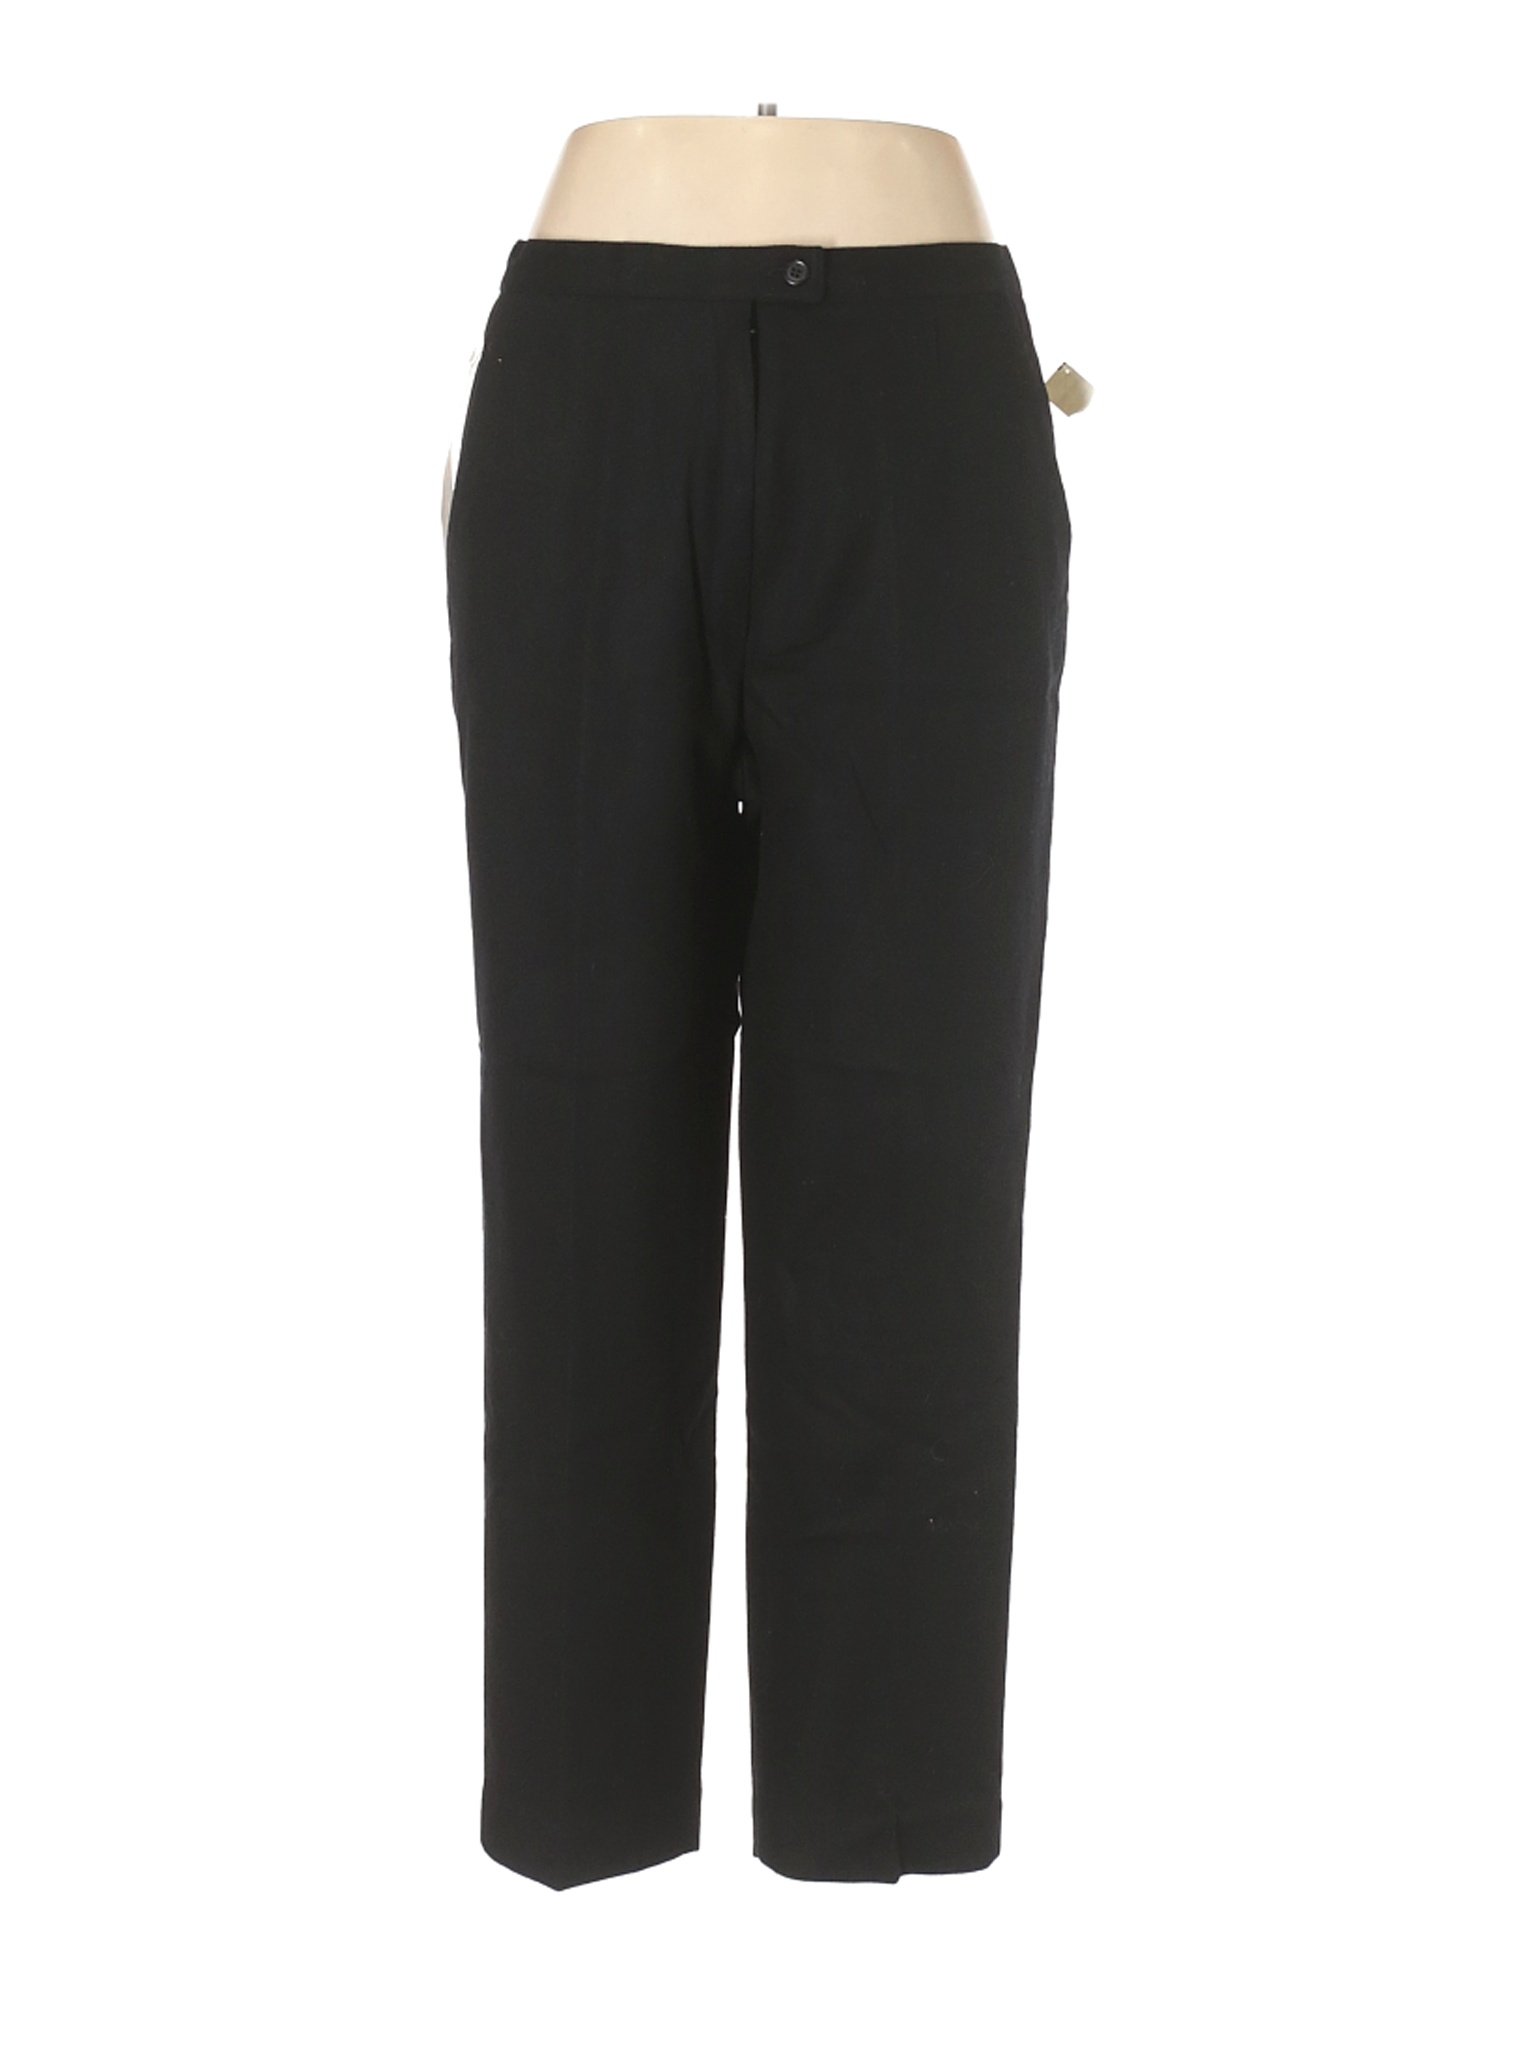 NWT Koret Women Black Wool Pants 16 | eBay